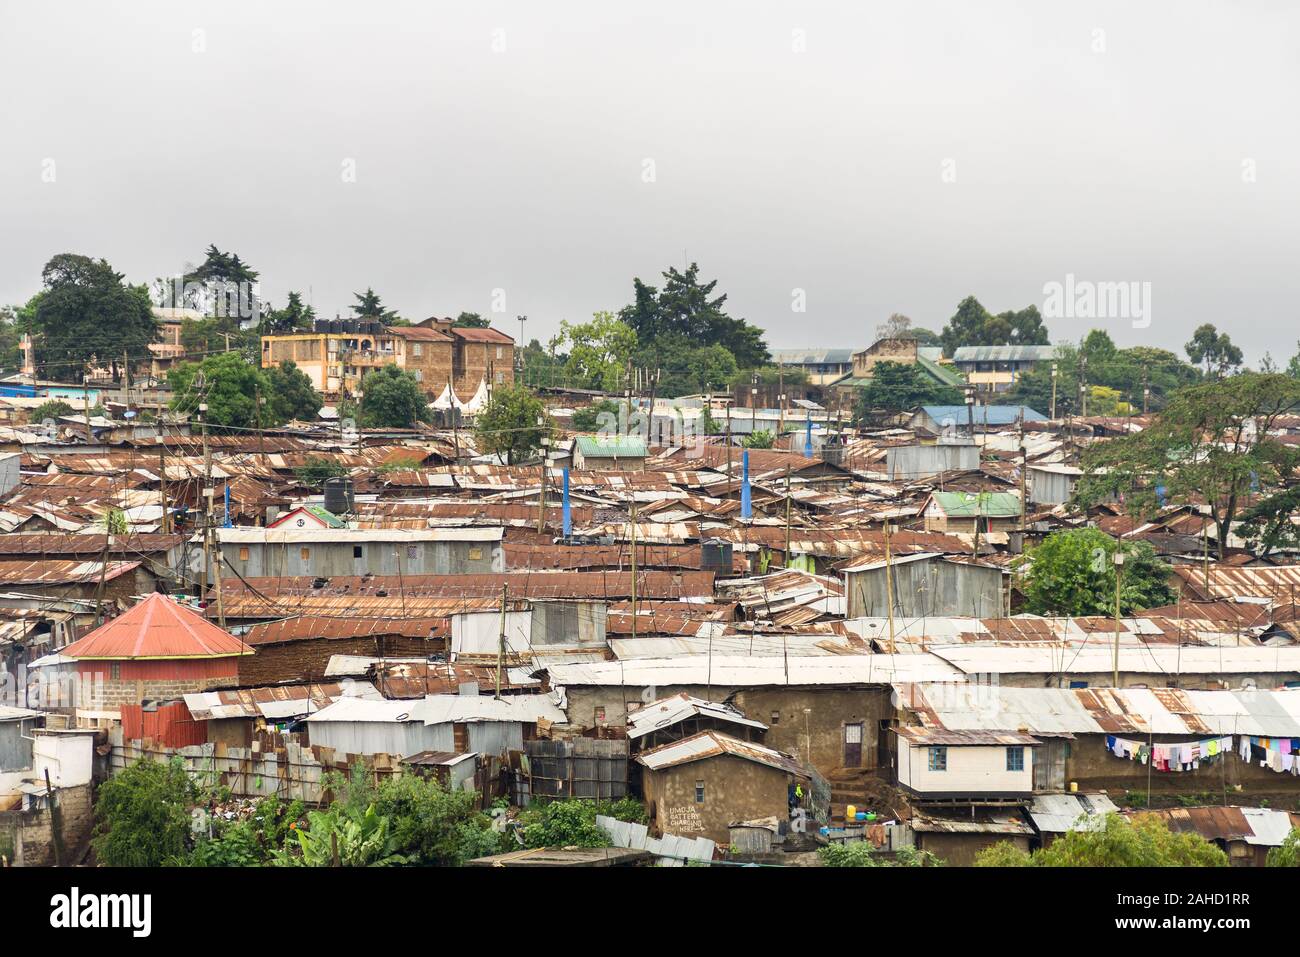 View of a section of Kibera slum showing makeshift shack housing, Nairobi, Kenya Stock Photo